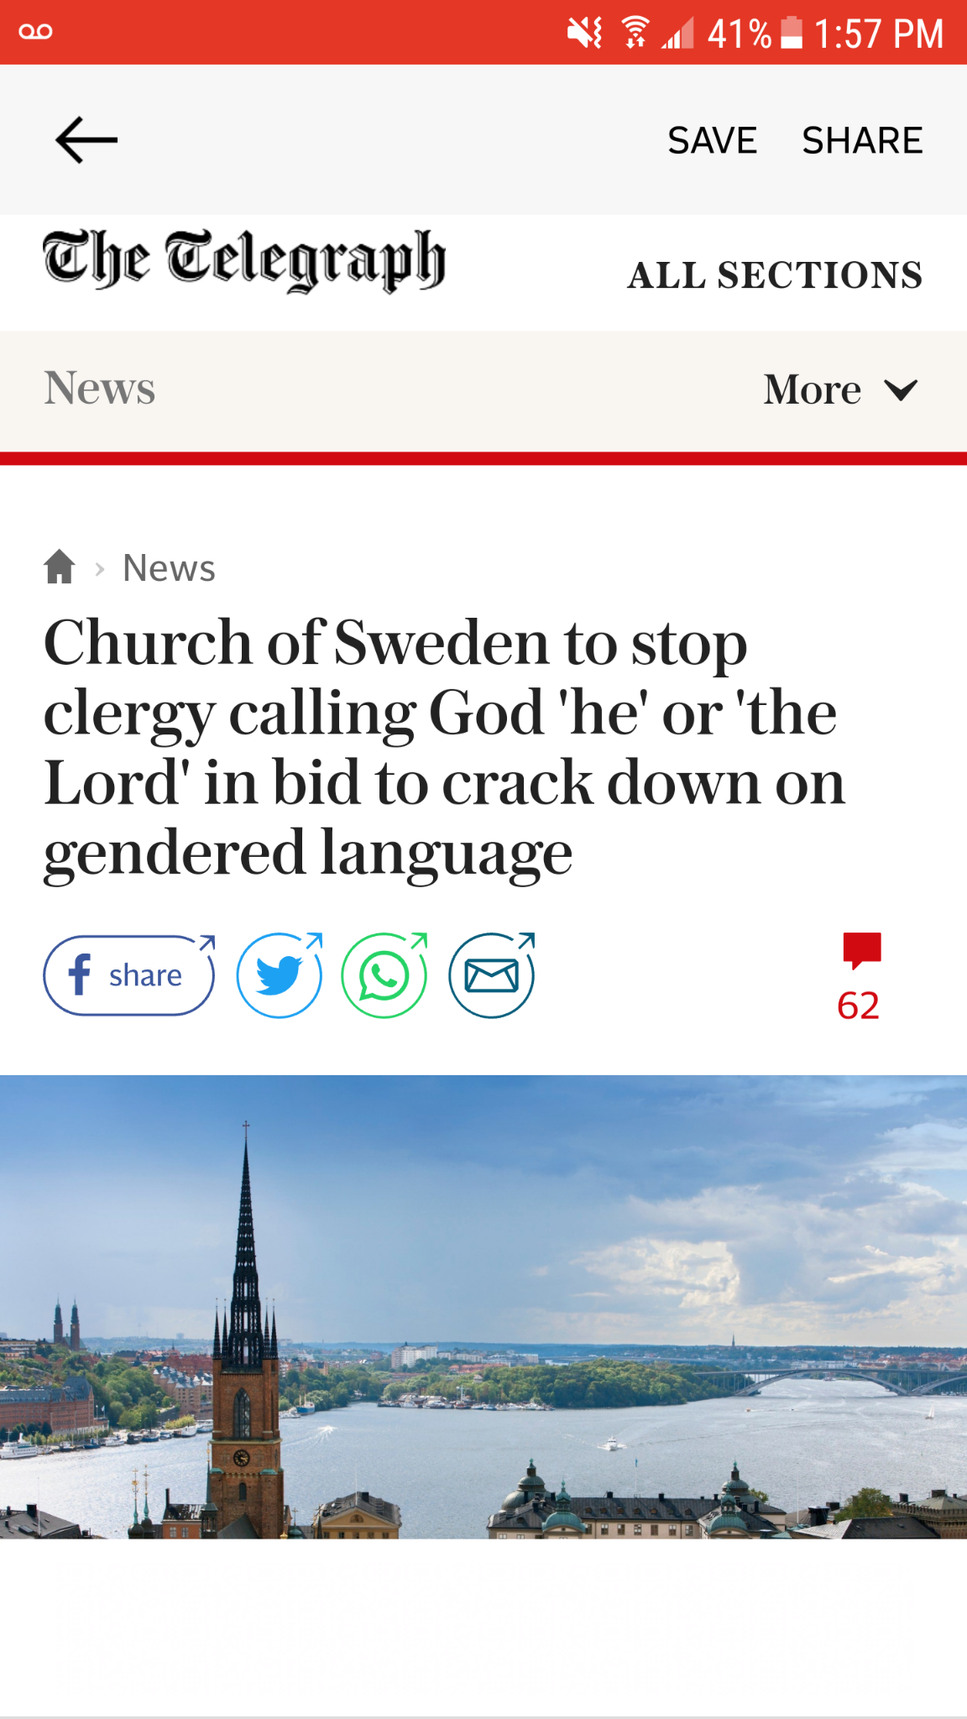 Ah Sweden, how "progressive" you are - meme